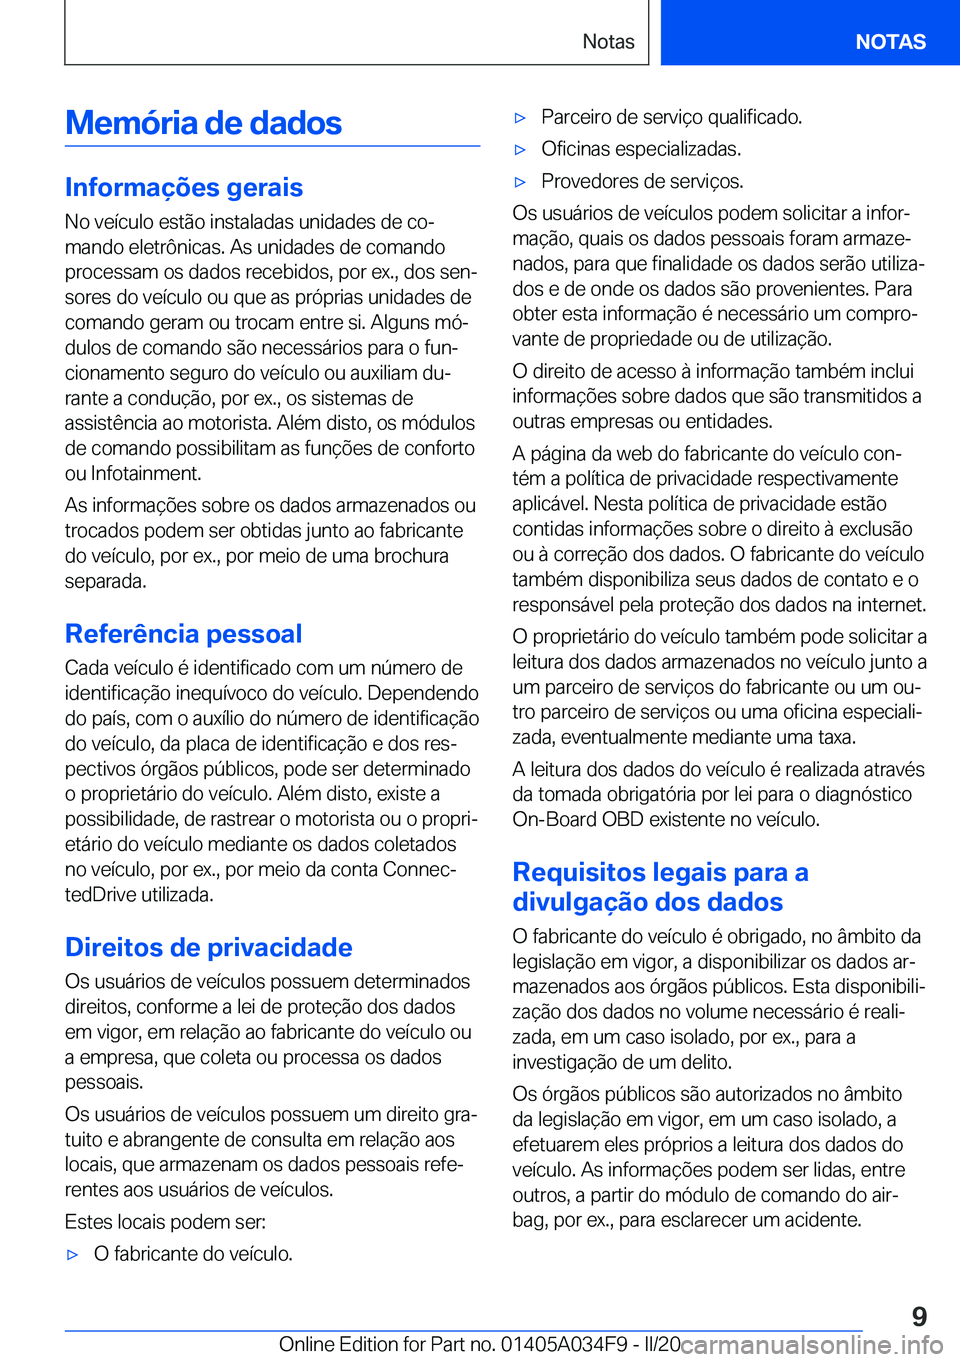 BMW X3 2020  Manual do condutor (in Portuguese) �M�e�m�ó�r�i�a��d�e��d�a�d�o�s
�I�n�f�o�r�m�a�